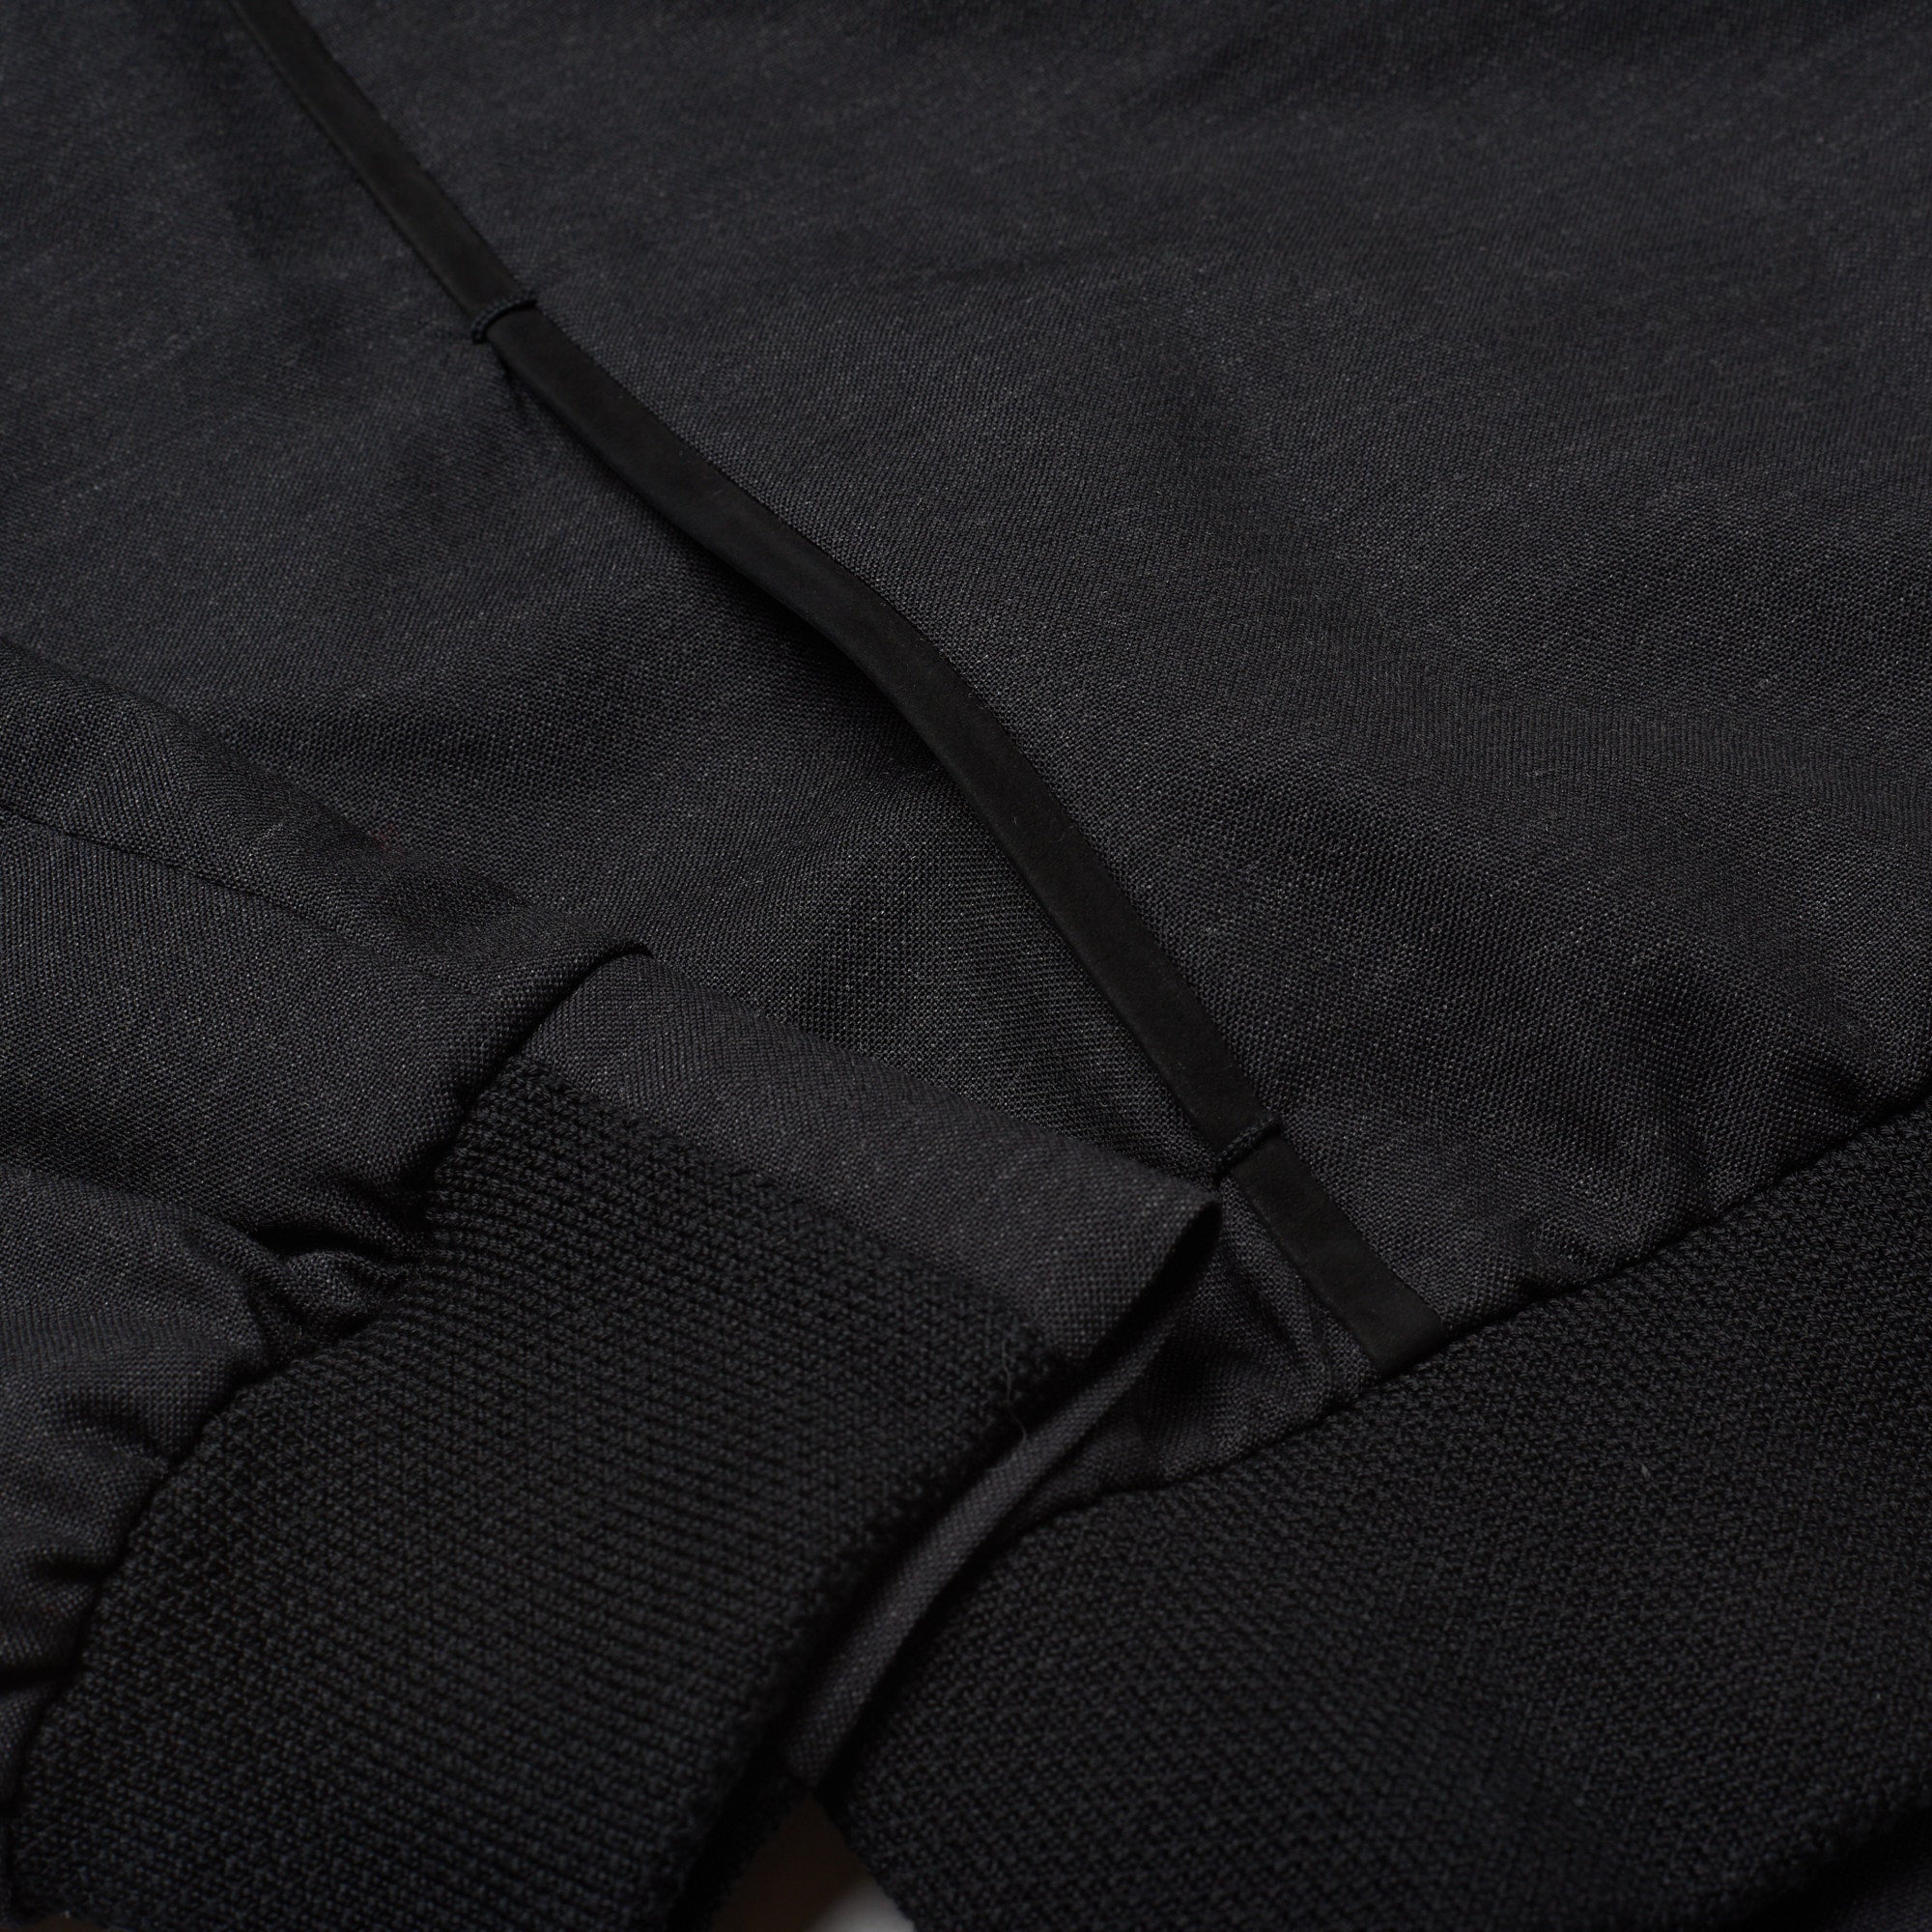 BERLUTI Paris Charcoal Gray Wool Unlined Blouson Jacket Leather Trims EU 50 NEW US M BERLUTI